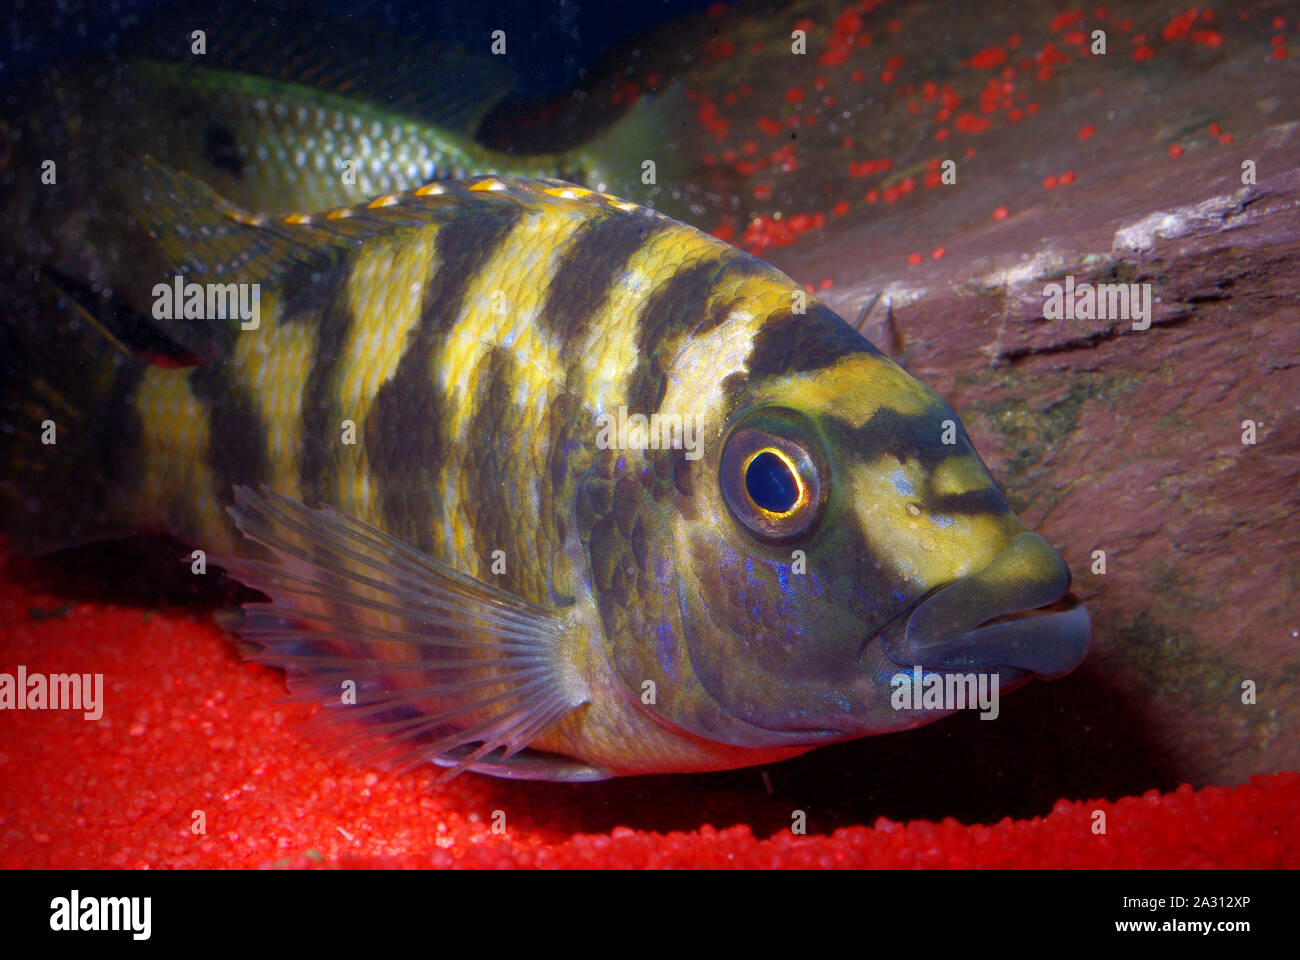 Haplochromis sp. Lake Victoria Cichlid Stock Photo